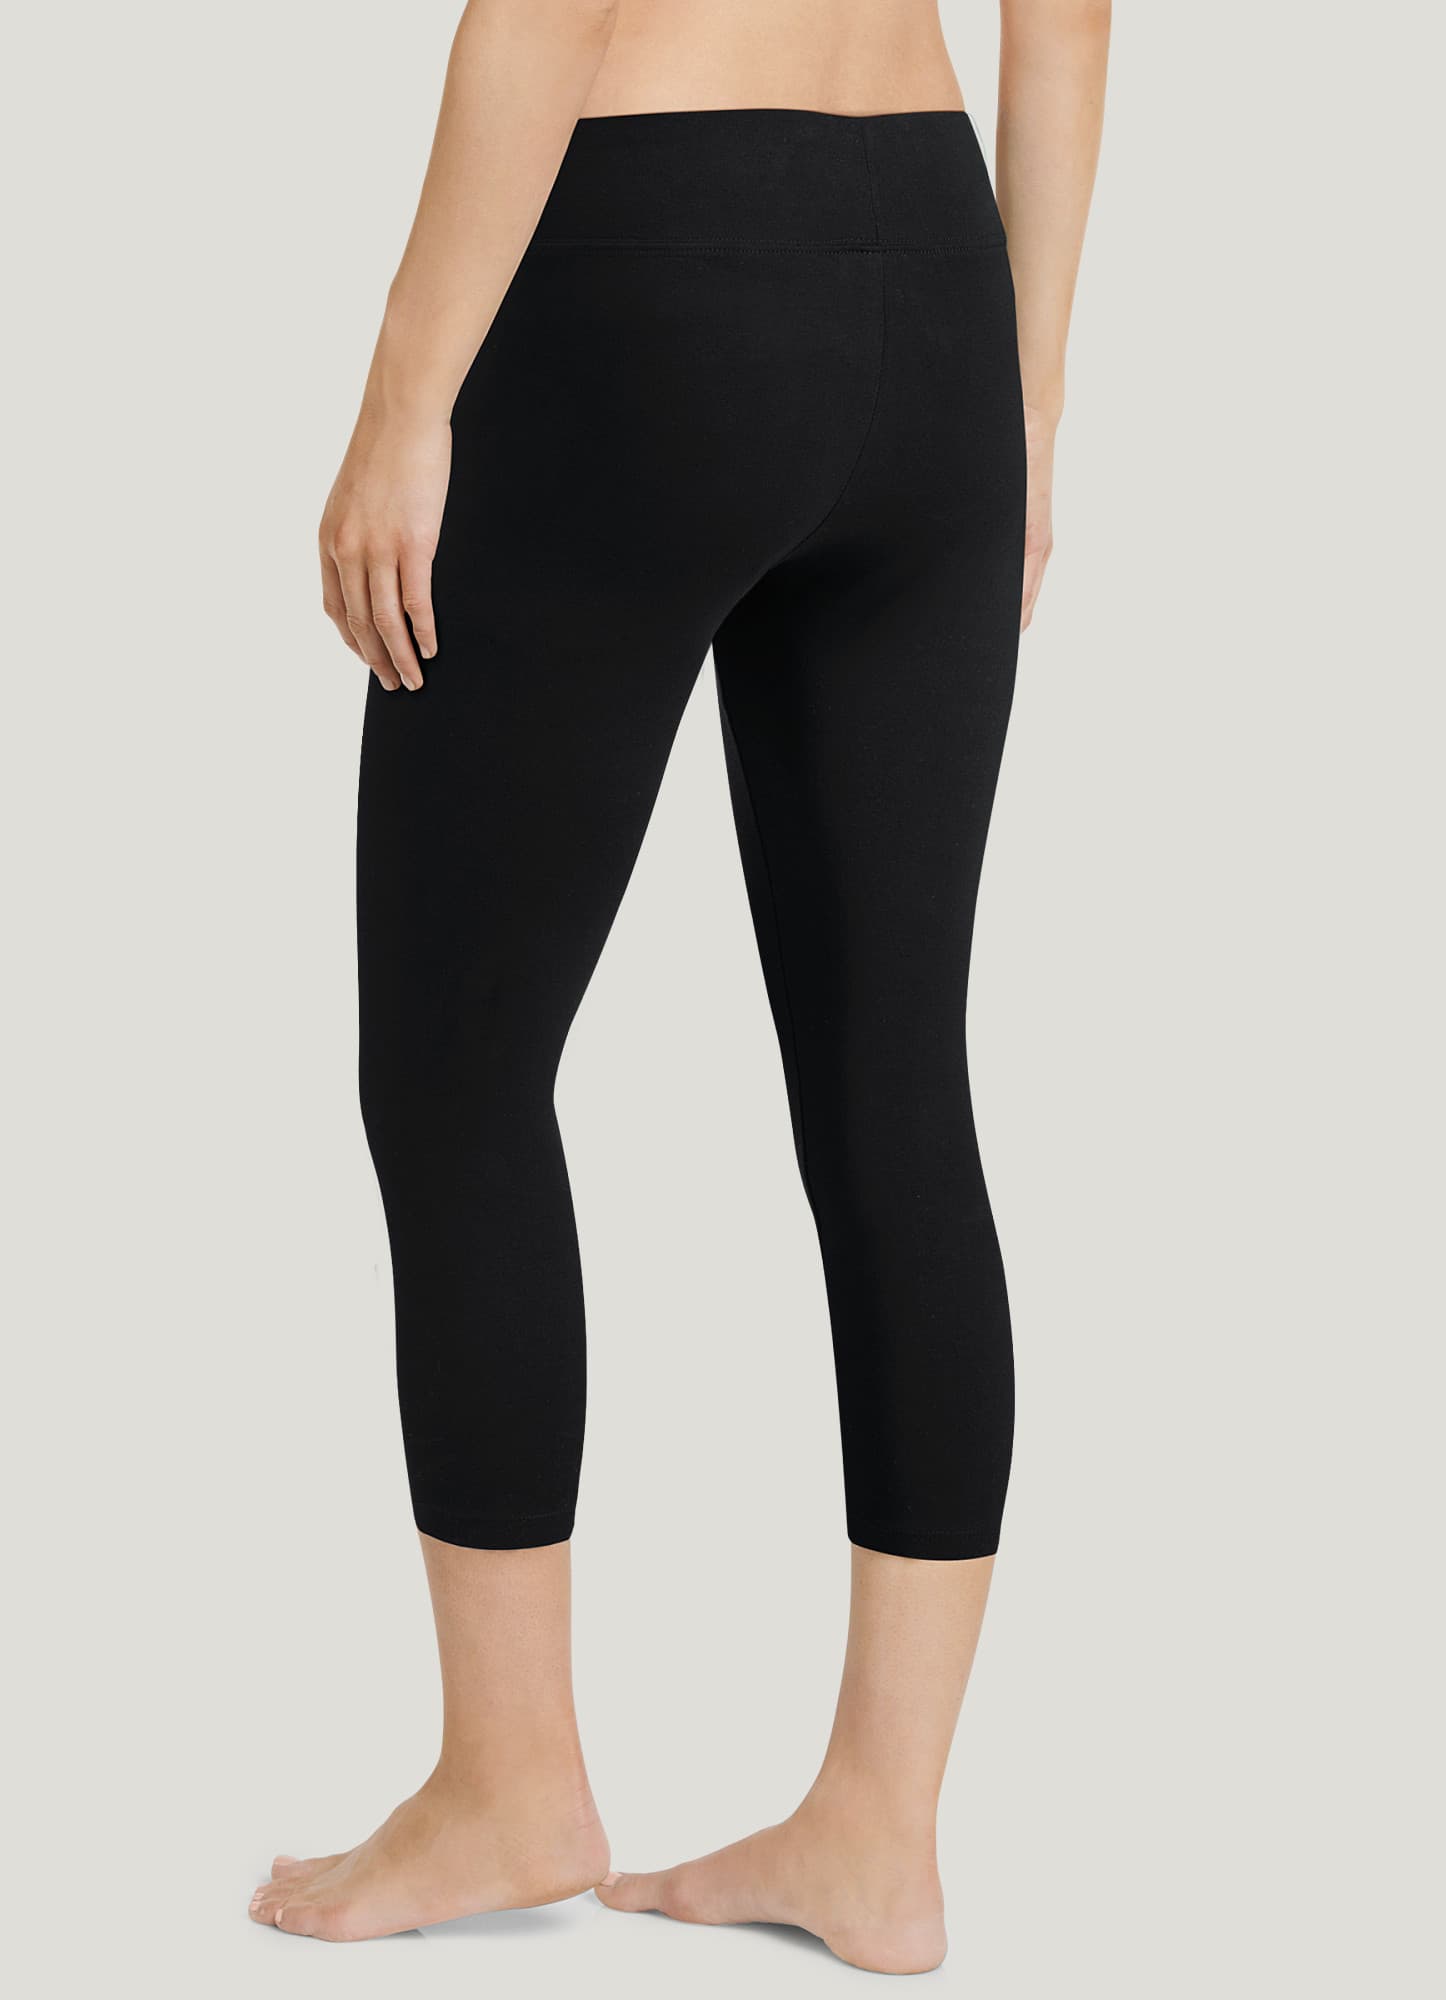 Women's Cotton Plus-size Leggings (3 Pack) Size 2X in Black (As Is